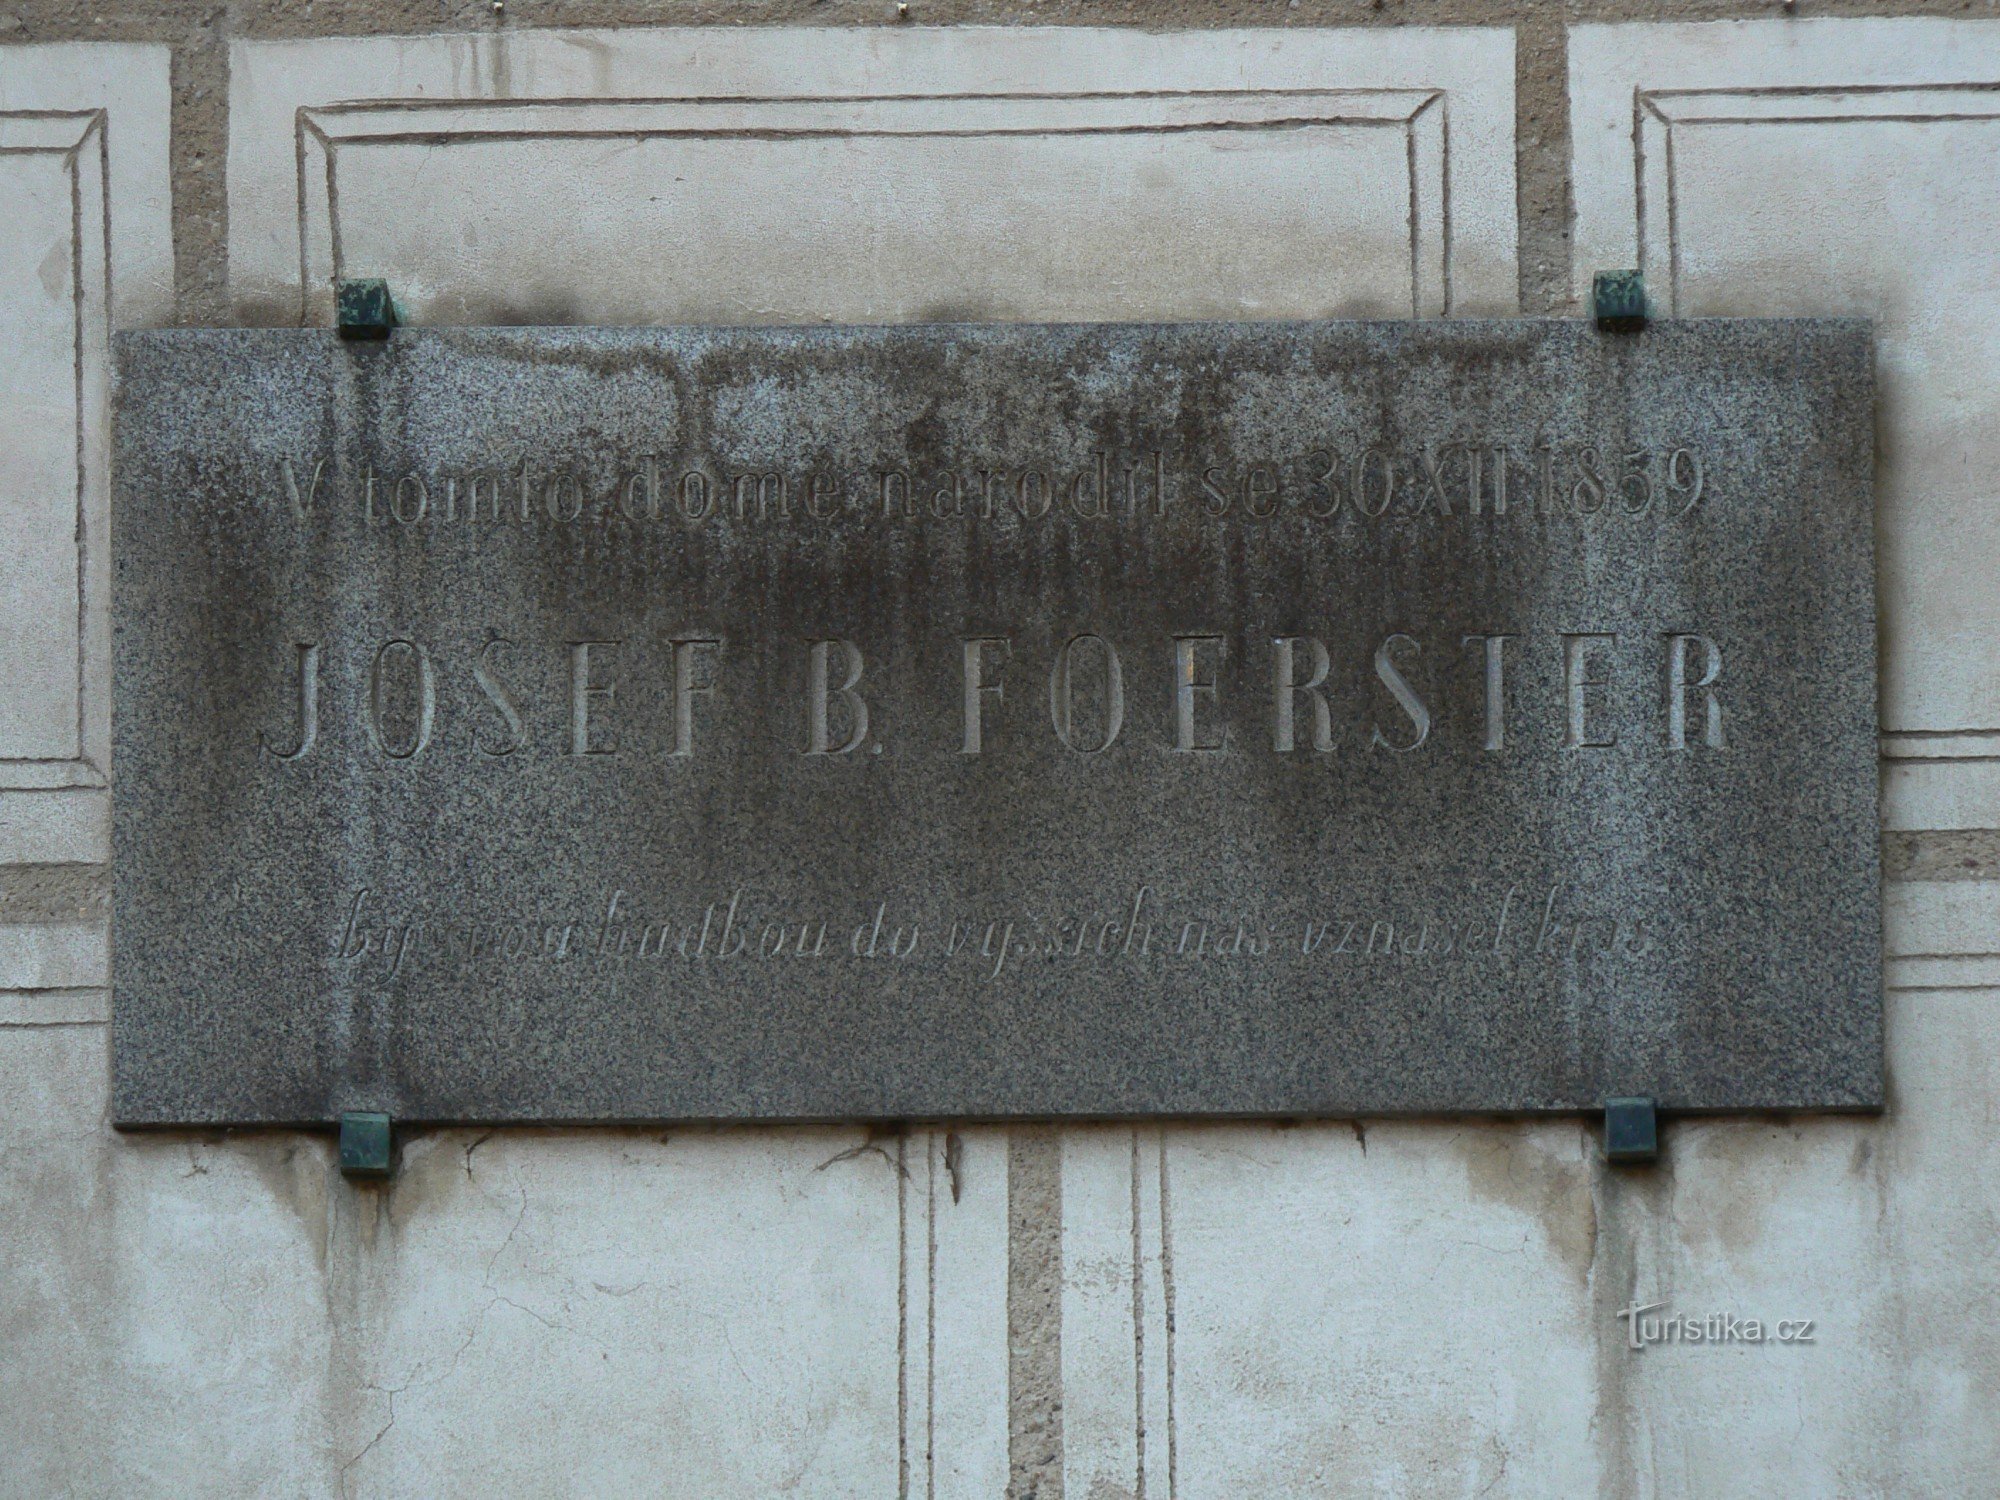 Spominska plošča Josef B. Foerster